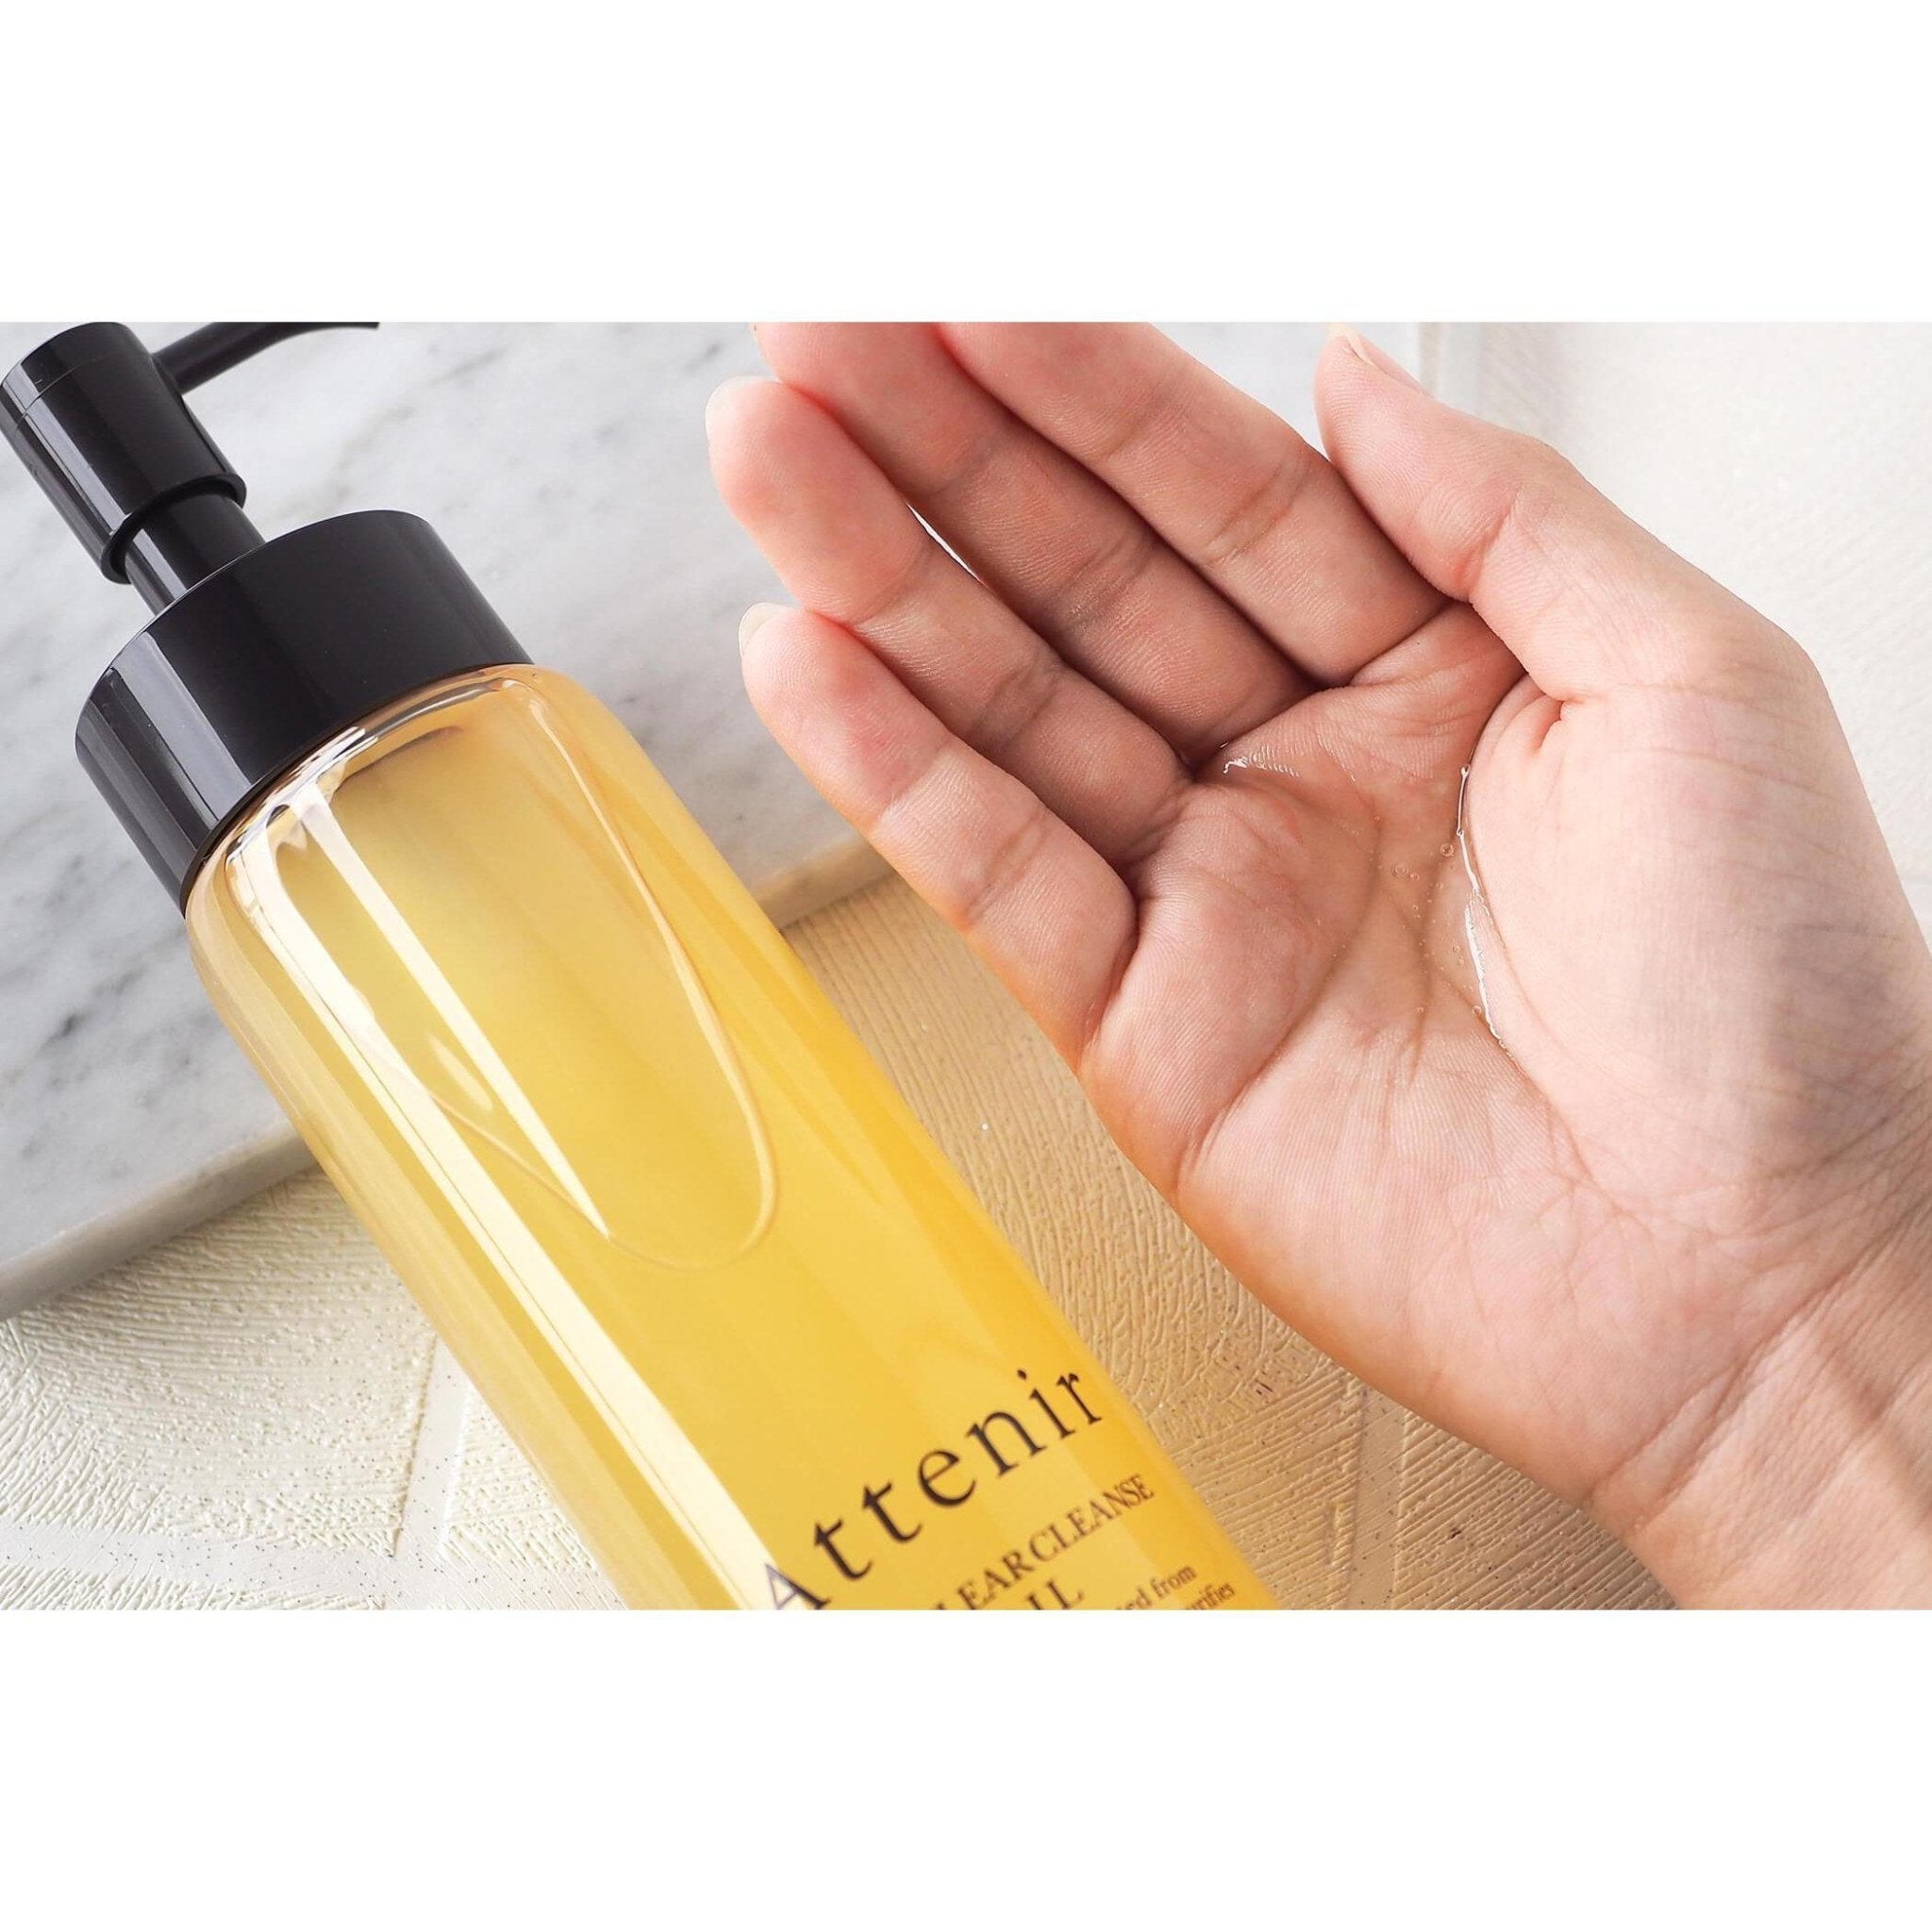 Attenir Skin Clear Oil Cleanser Aroma Type 175ml - YOYO JAPAN